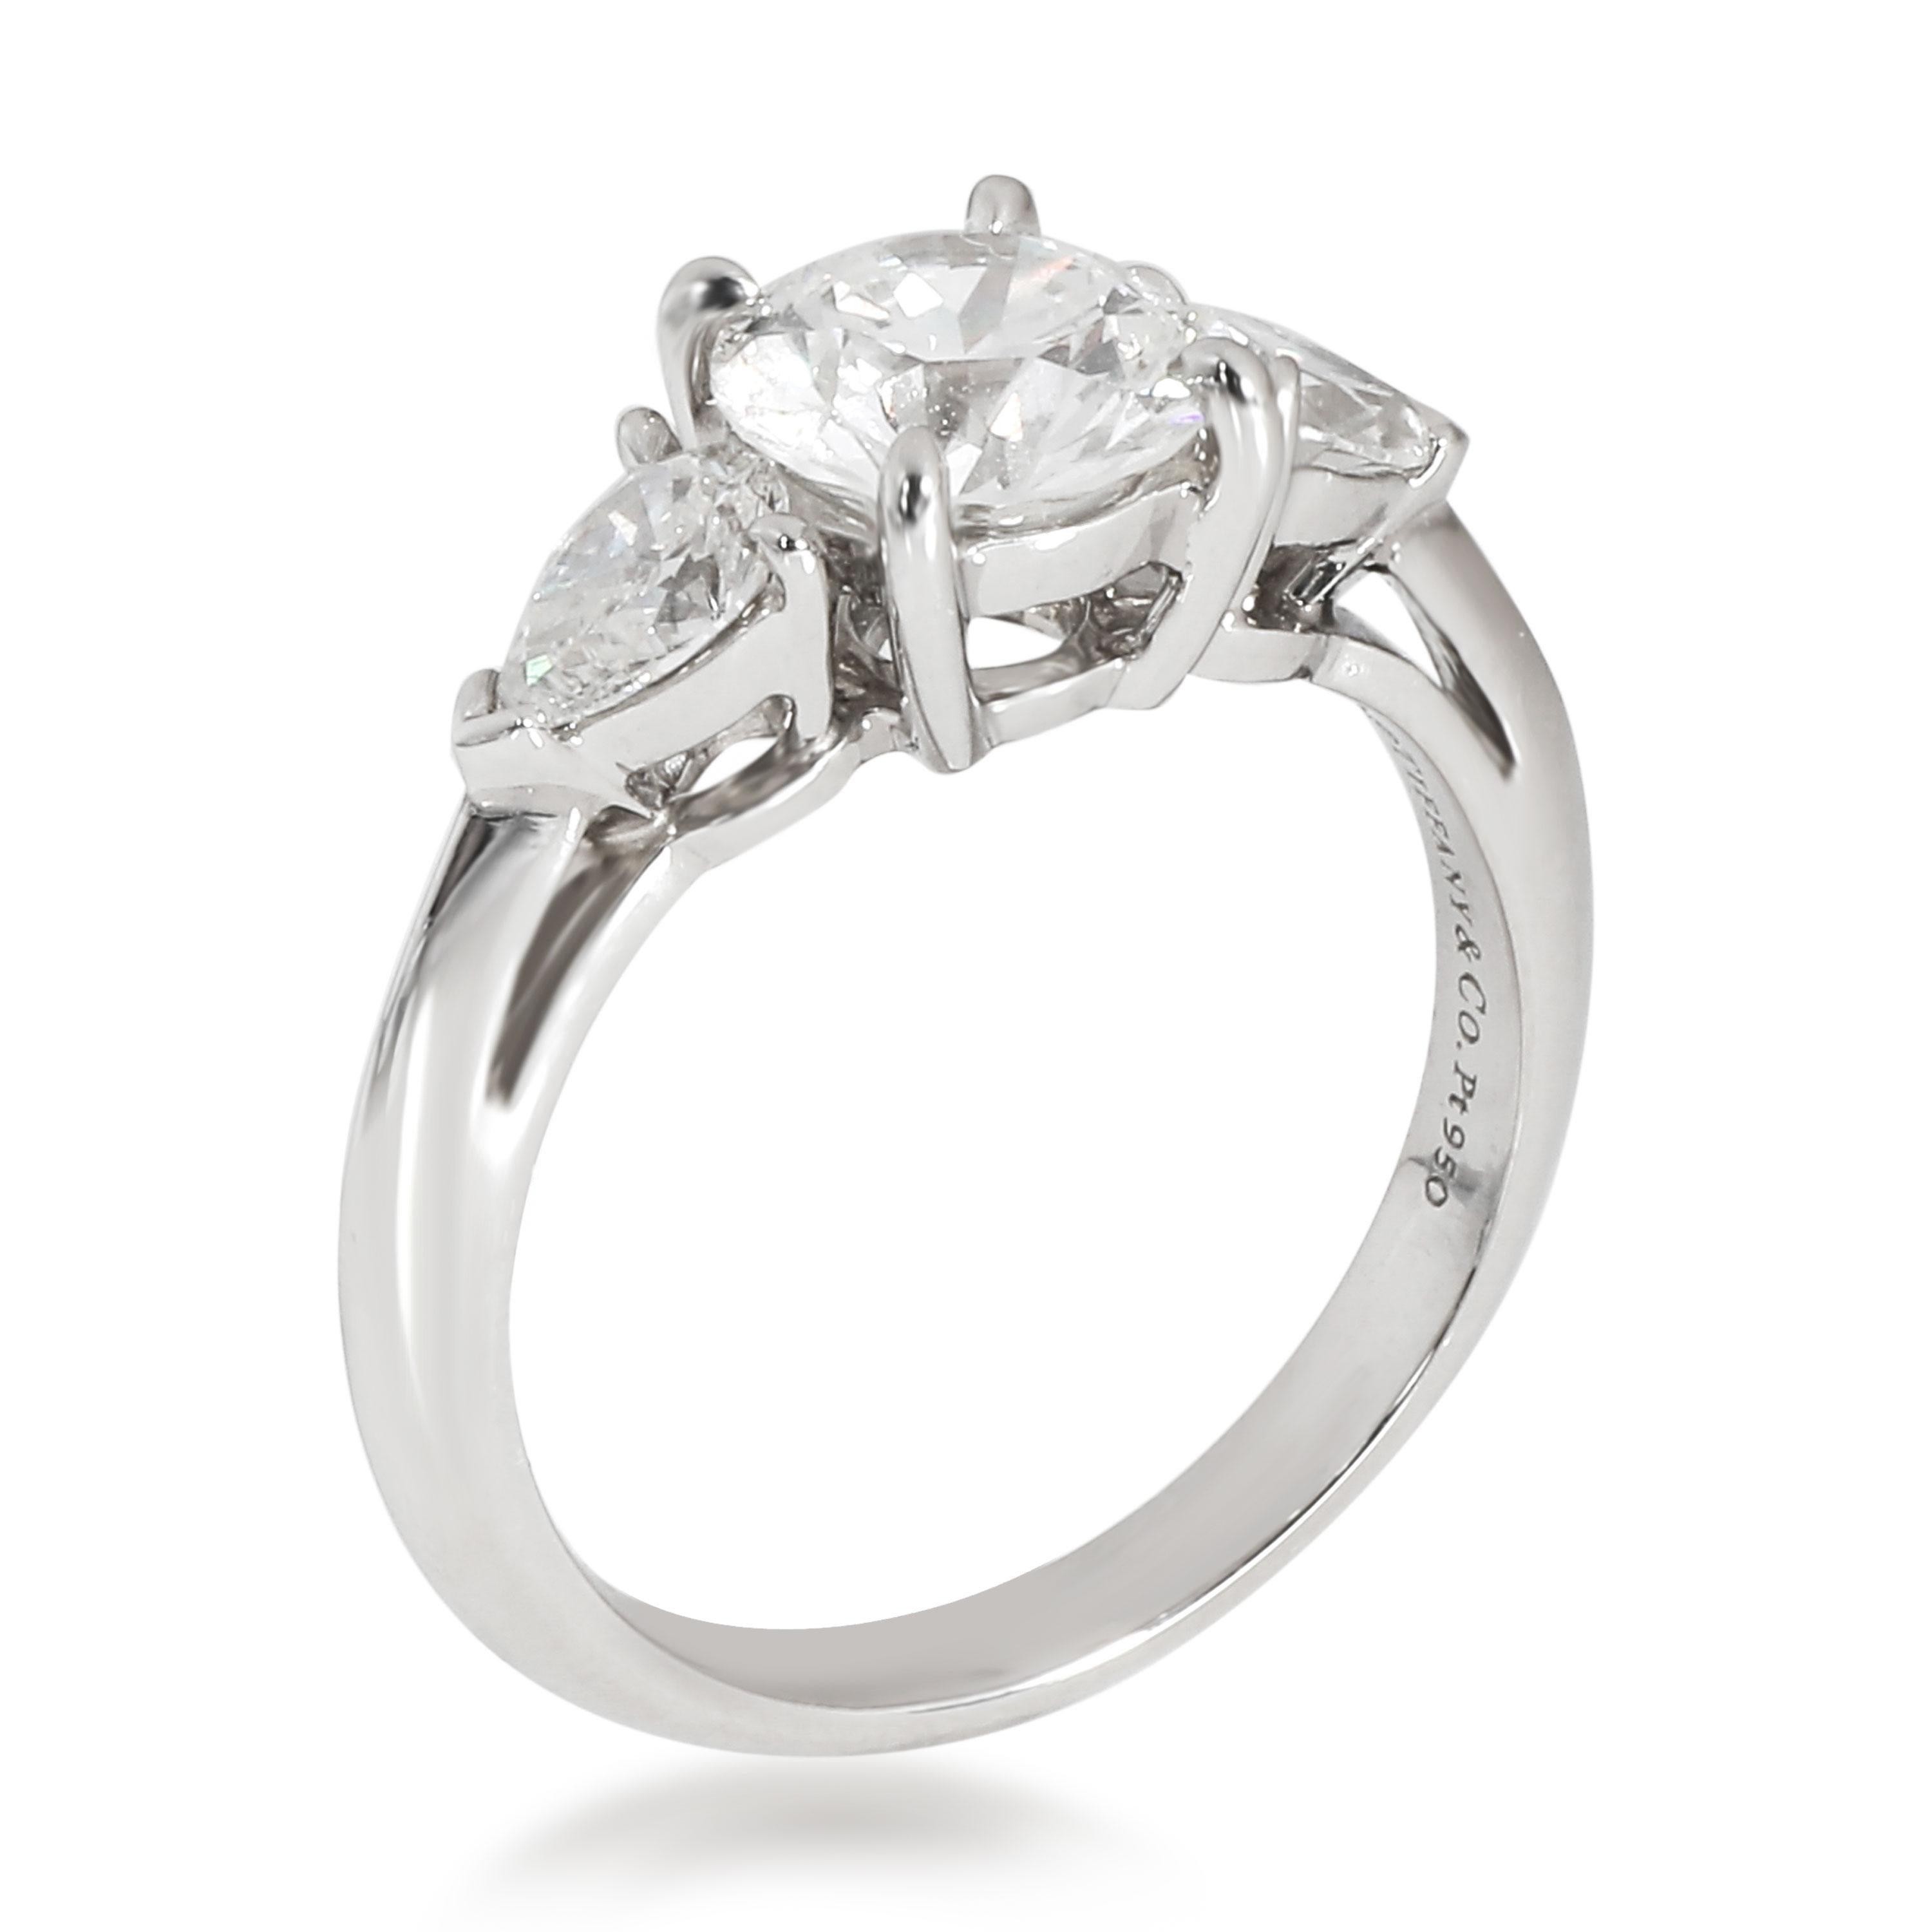 Round Cut Tiffany & Co. Three-Stone Diamond Engagement Ring in Platinum F VS1 1.67 Carat